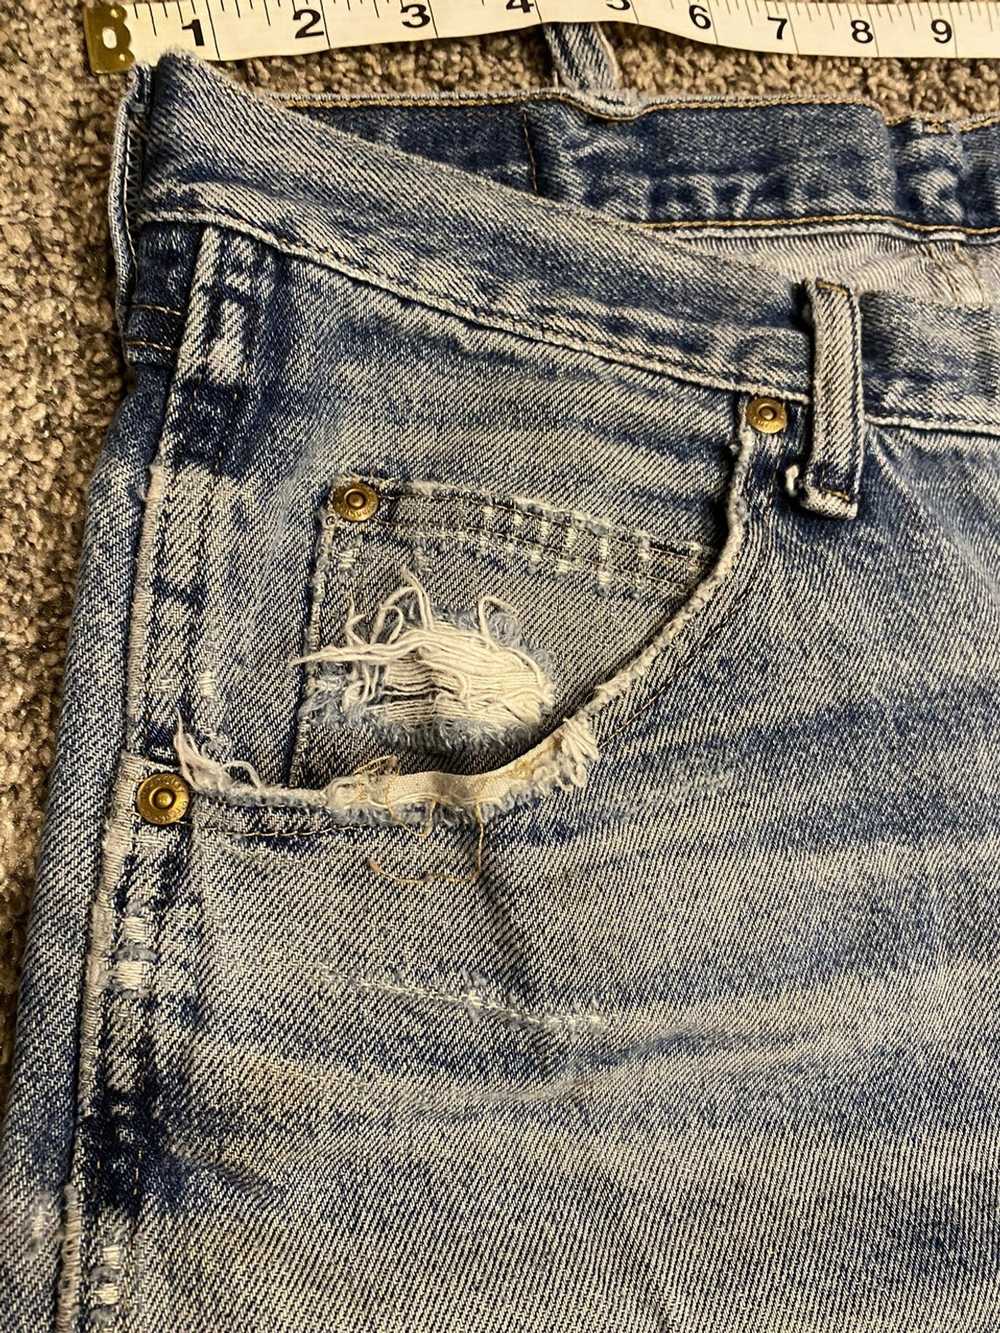 Wrangler Distressed wrangler jeans 34x32 - image 4